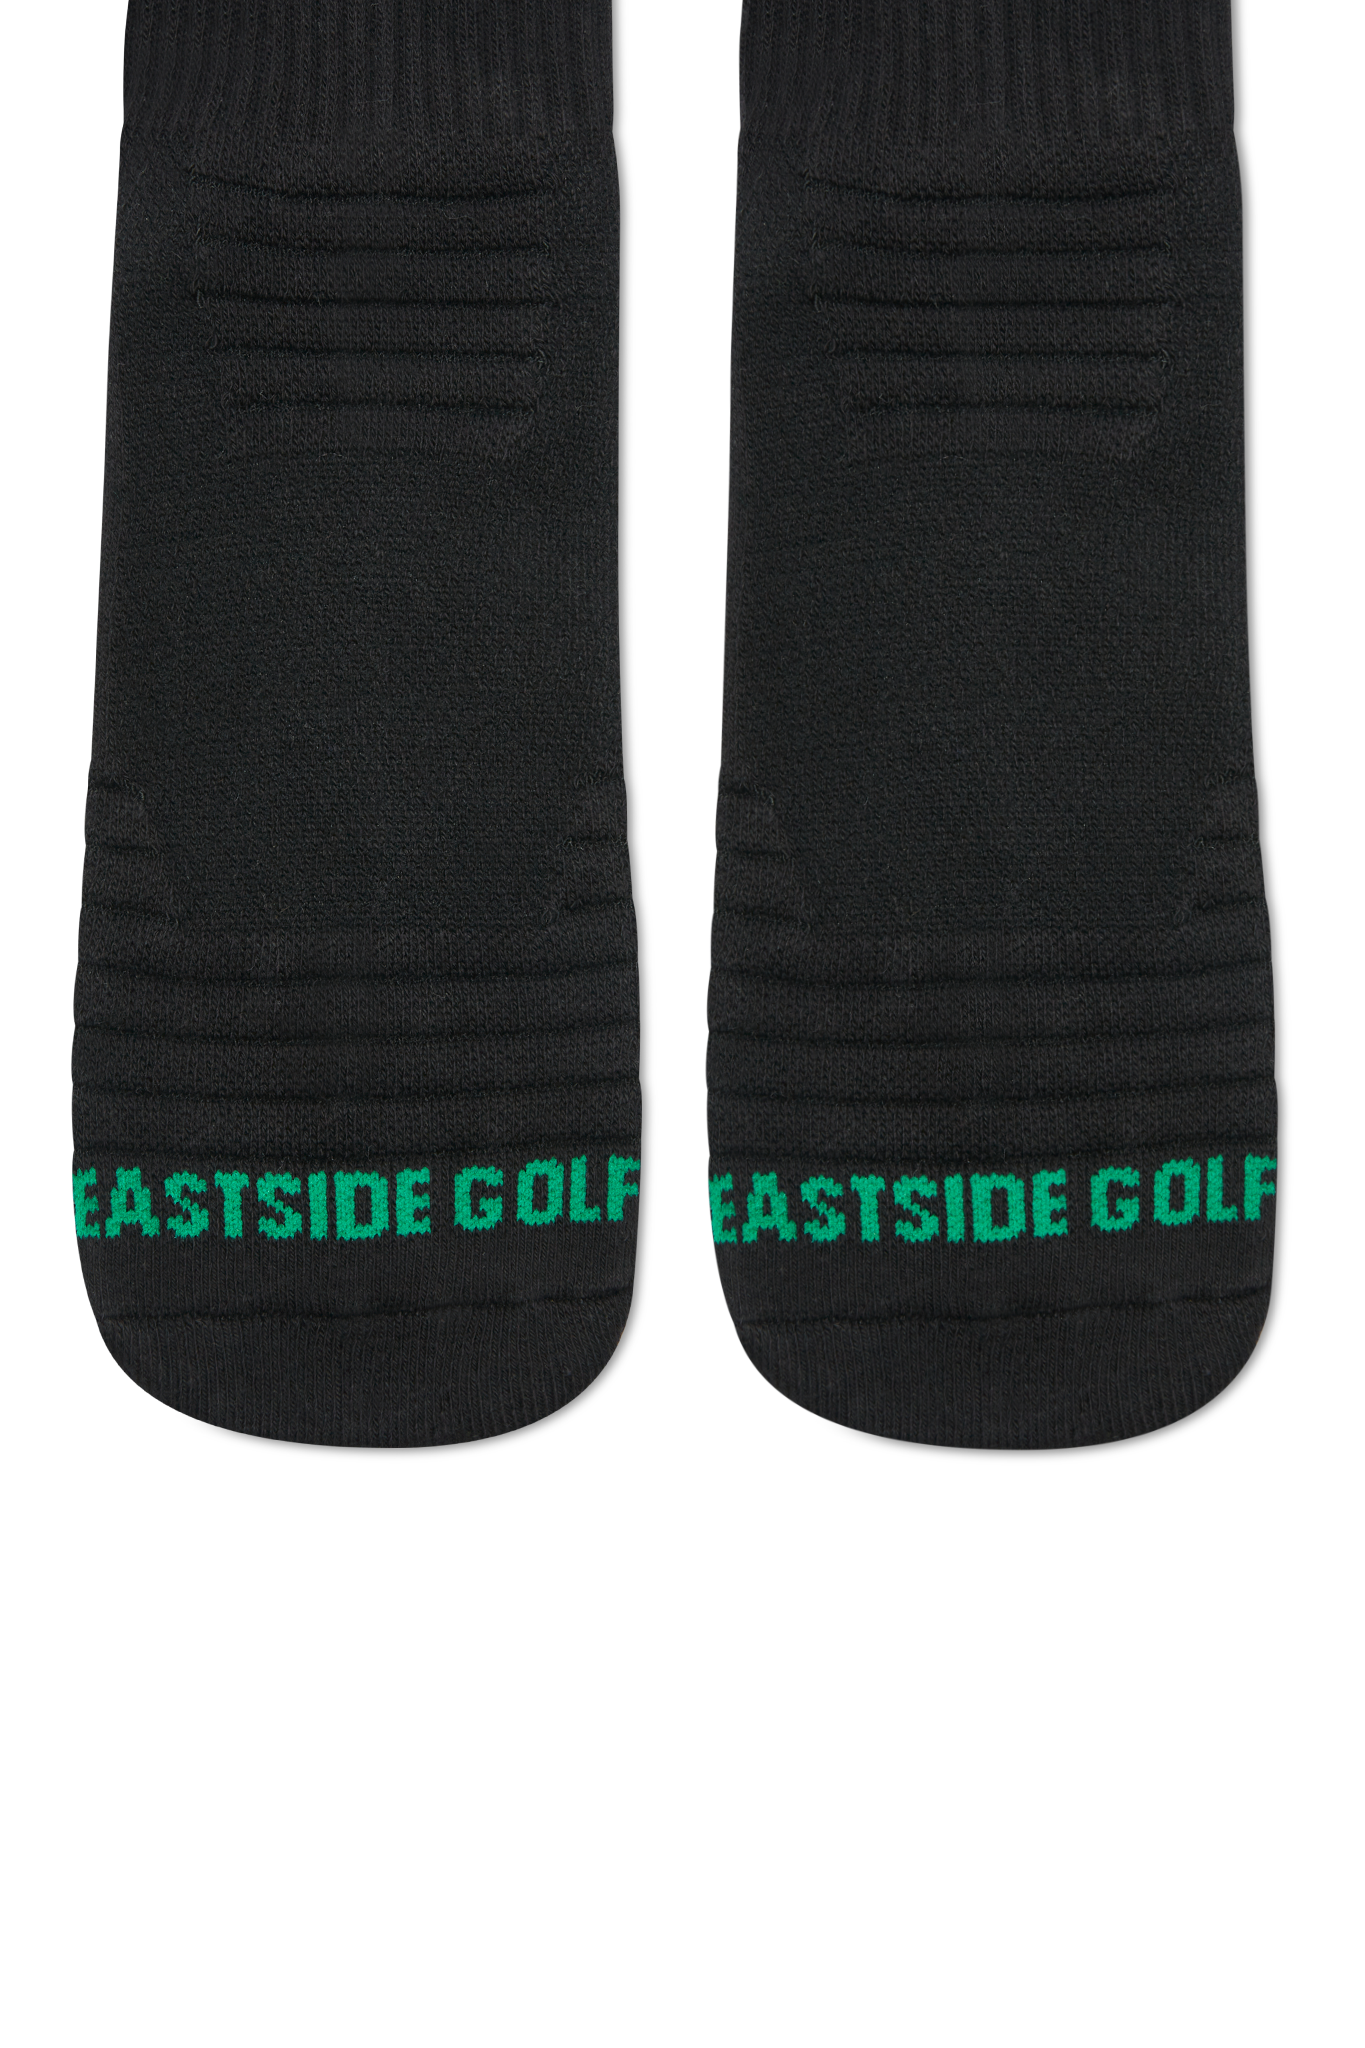 Eastside Golf 1961 Change Ankle Sock Black